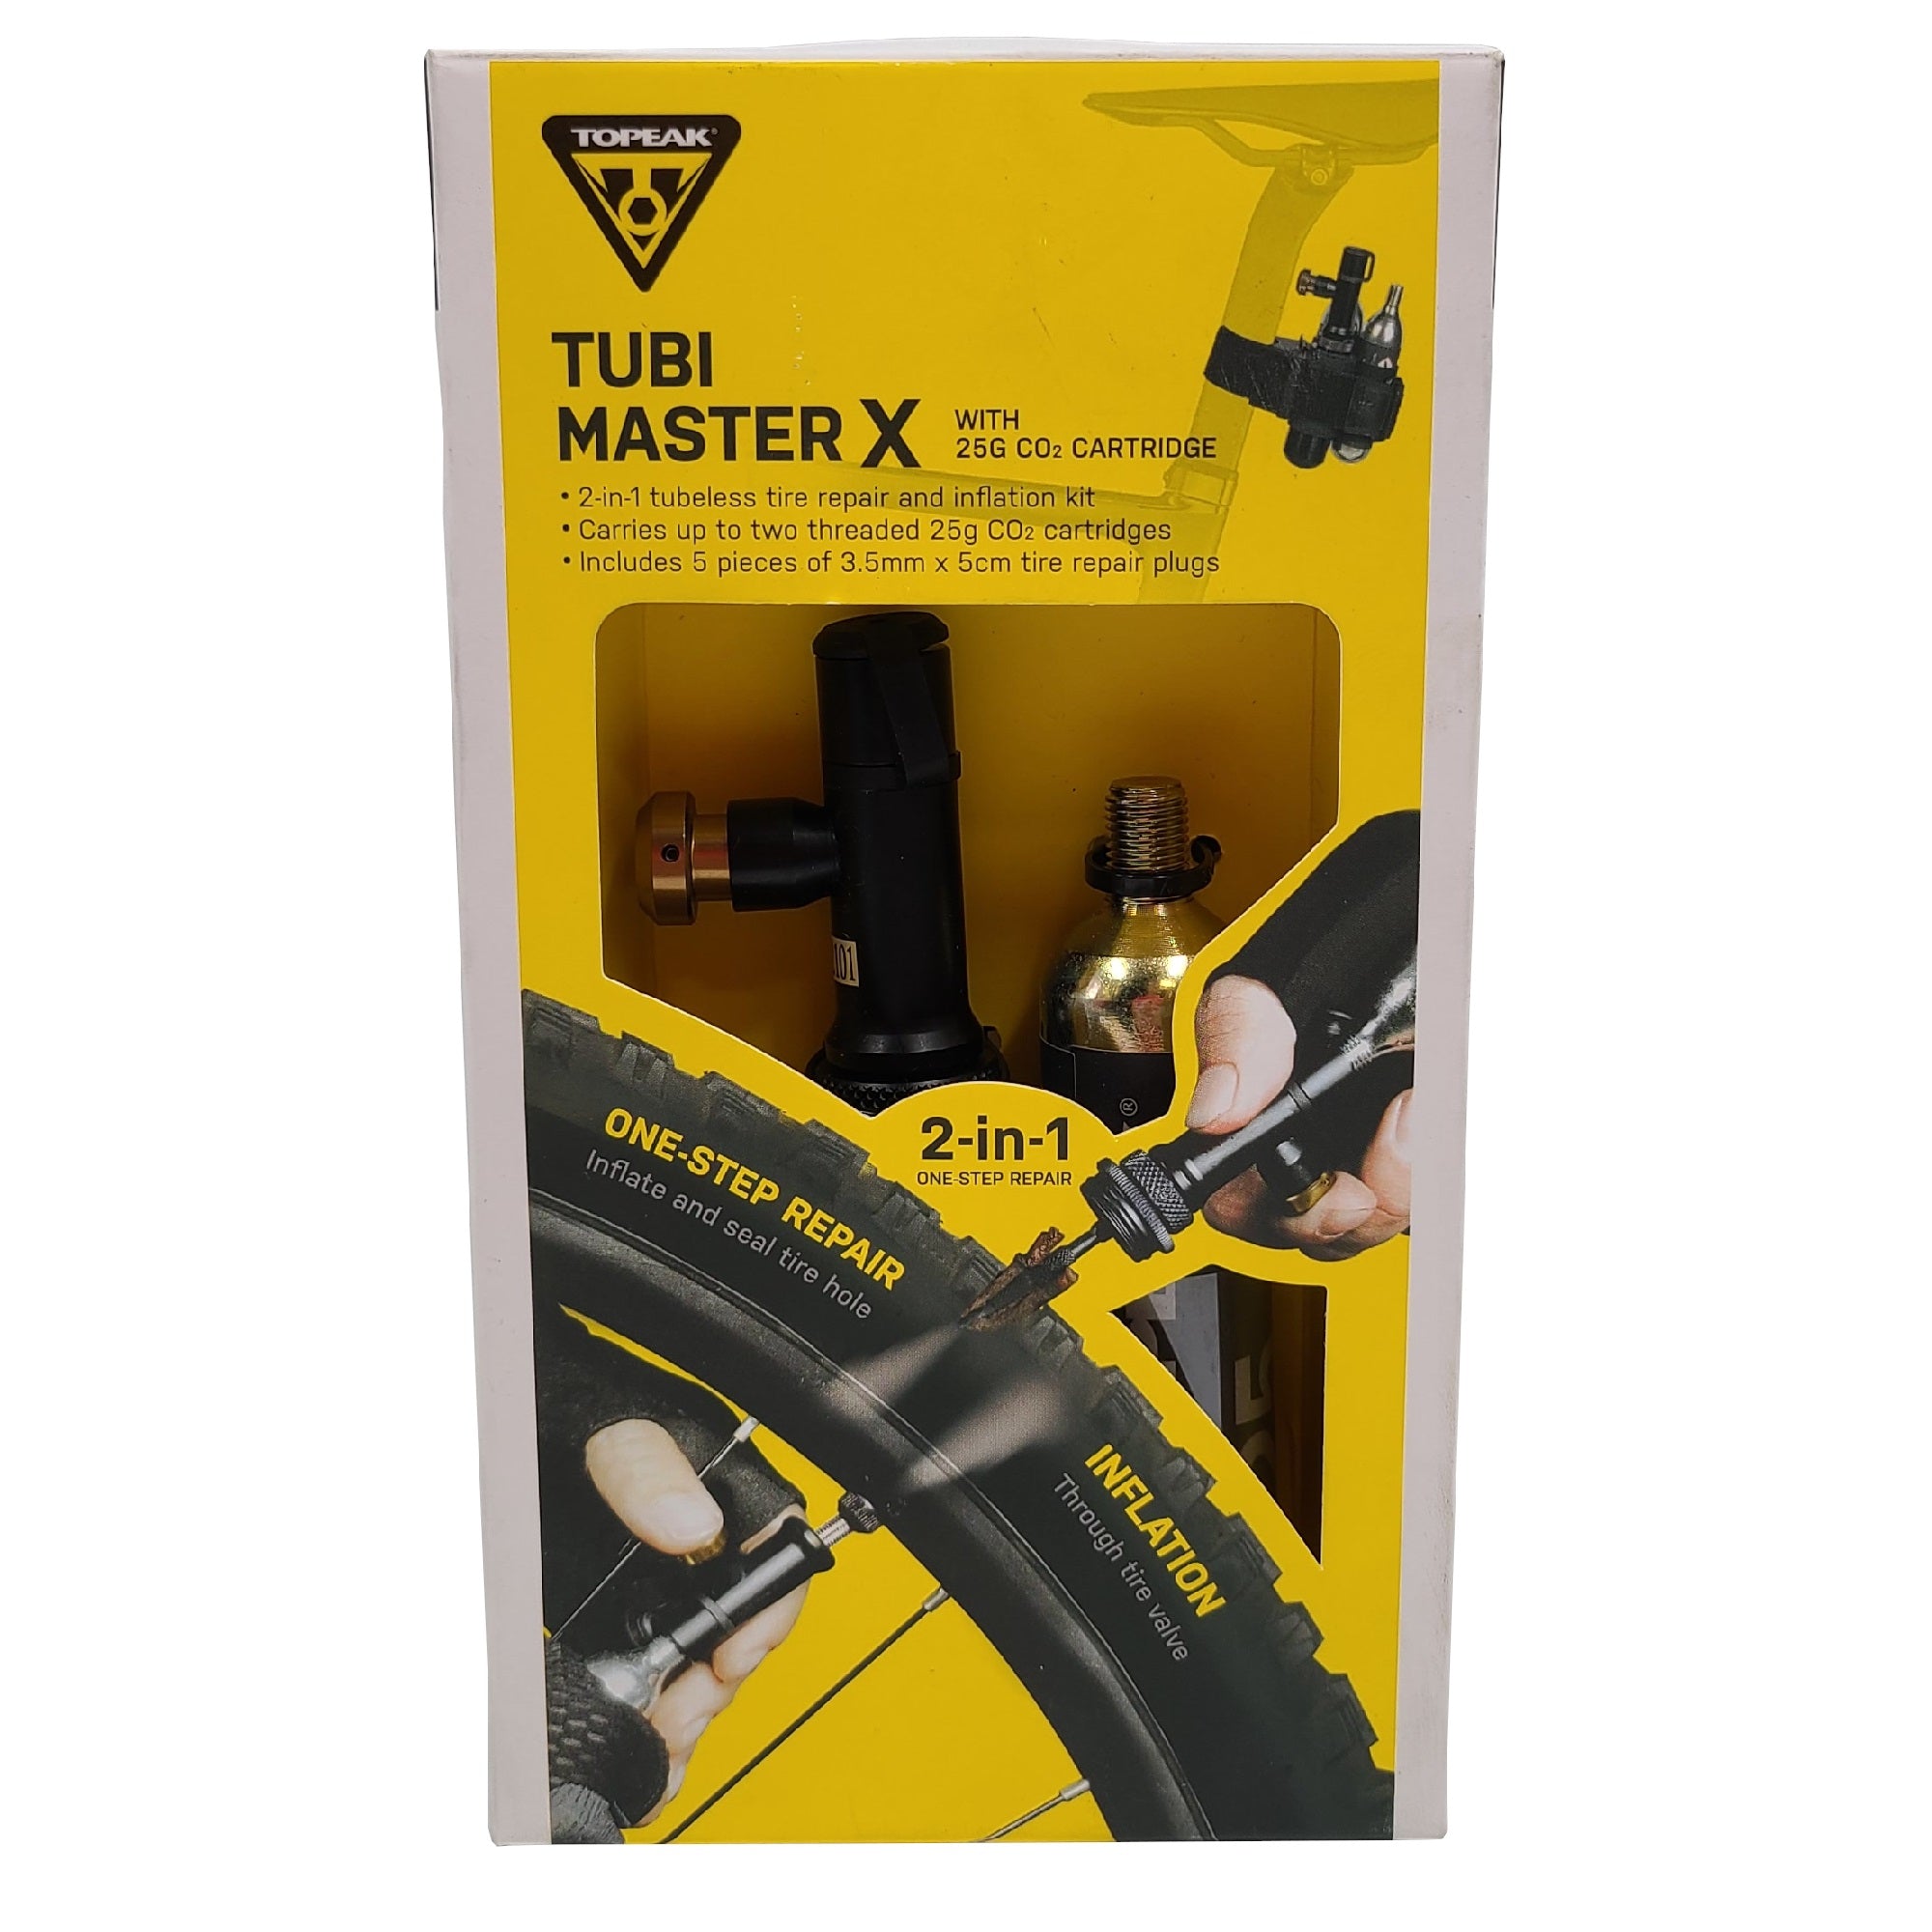 Topeak TUB-MSX Tubi Master X Tubeless Tire Flat Repair Kit with 25g CO2 Cartridge - The Bikesmiths